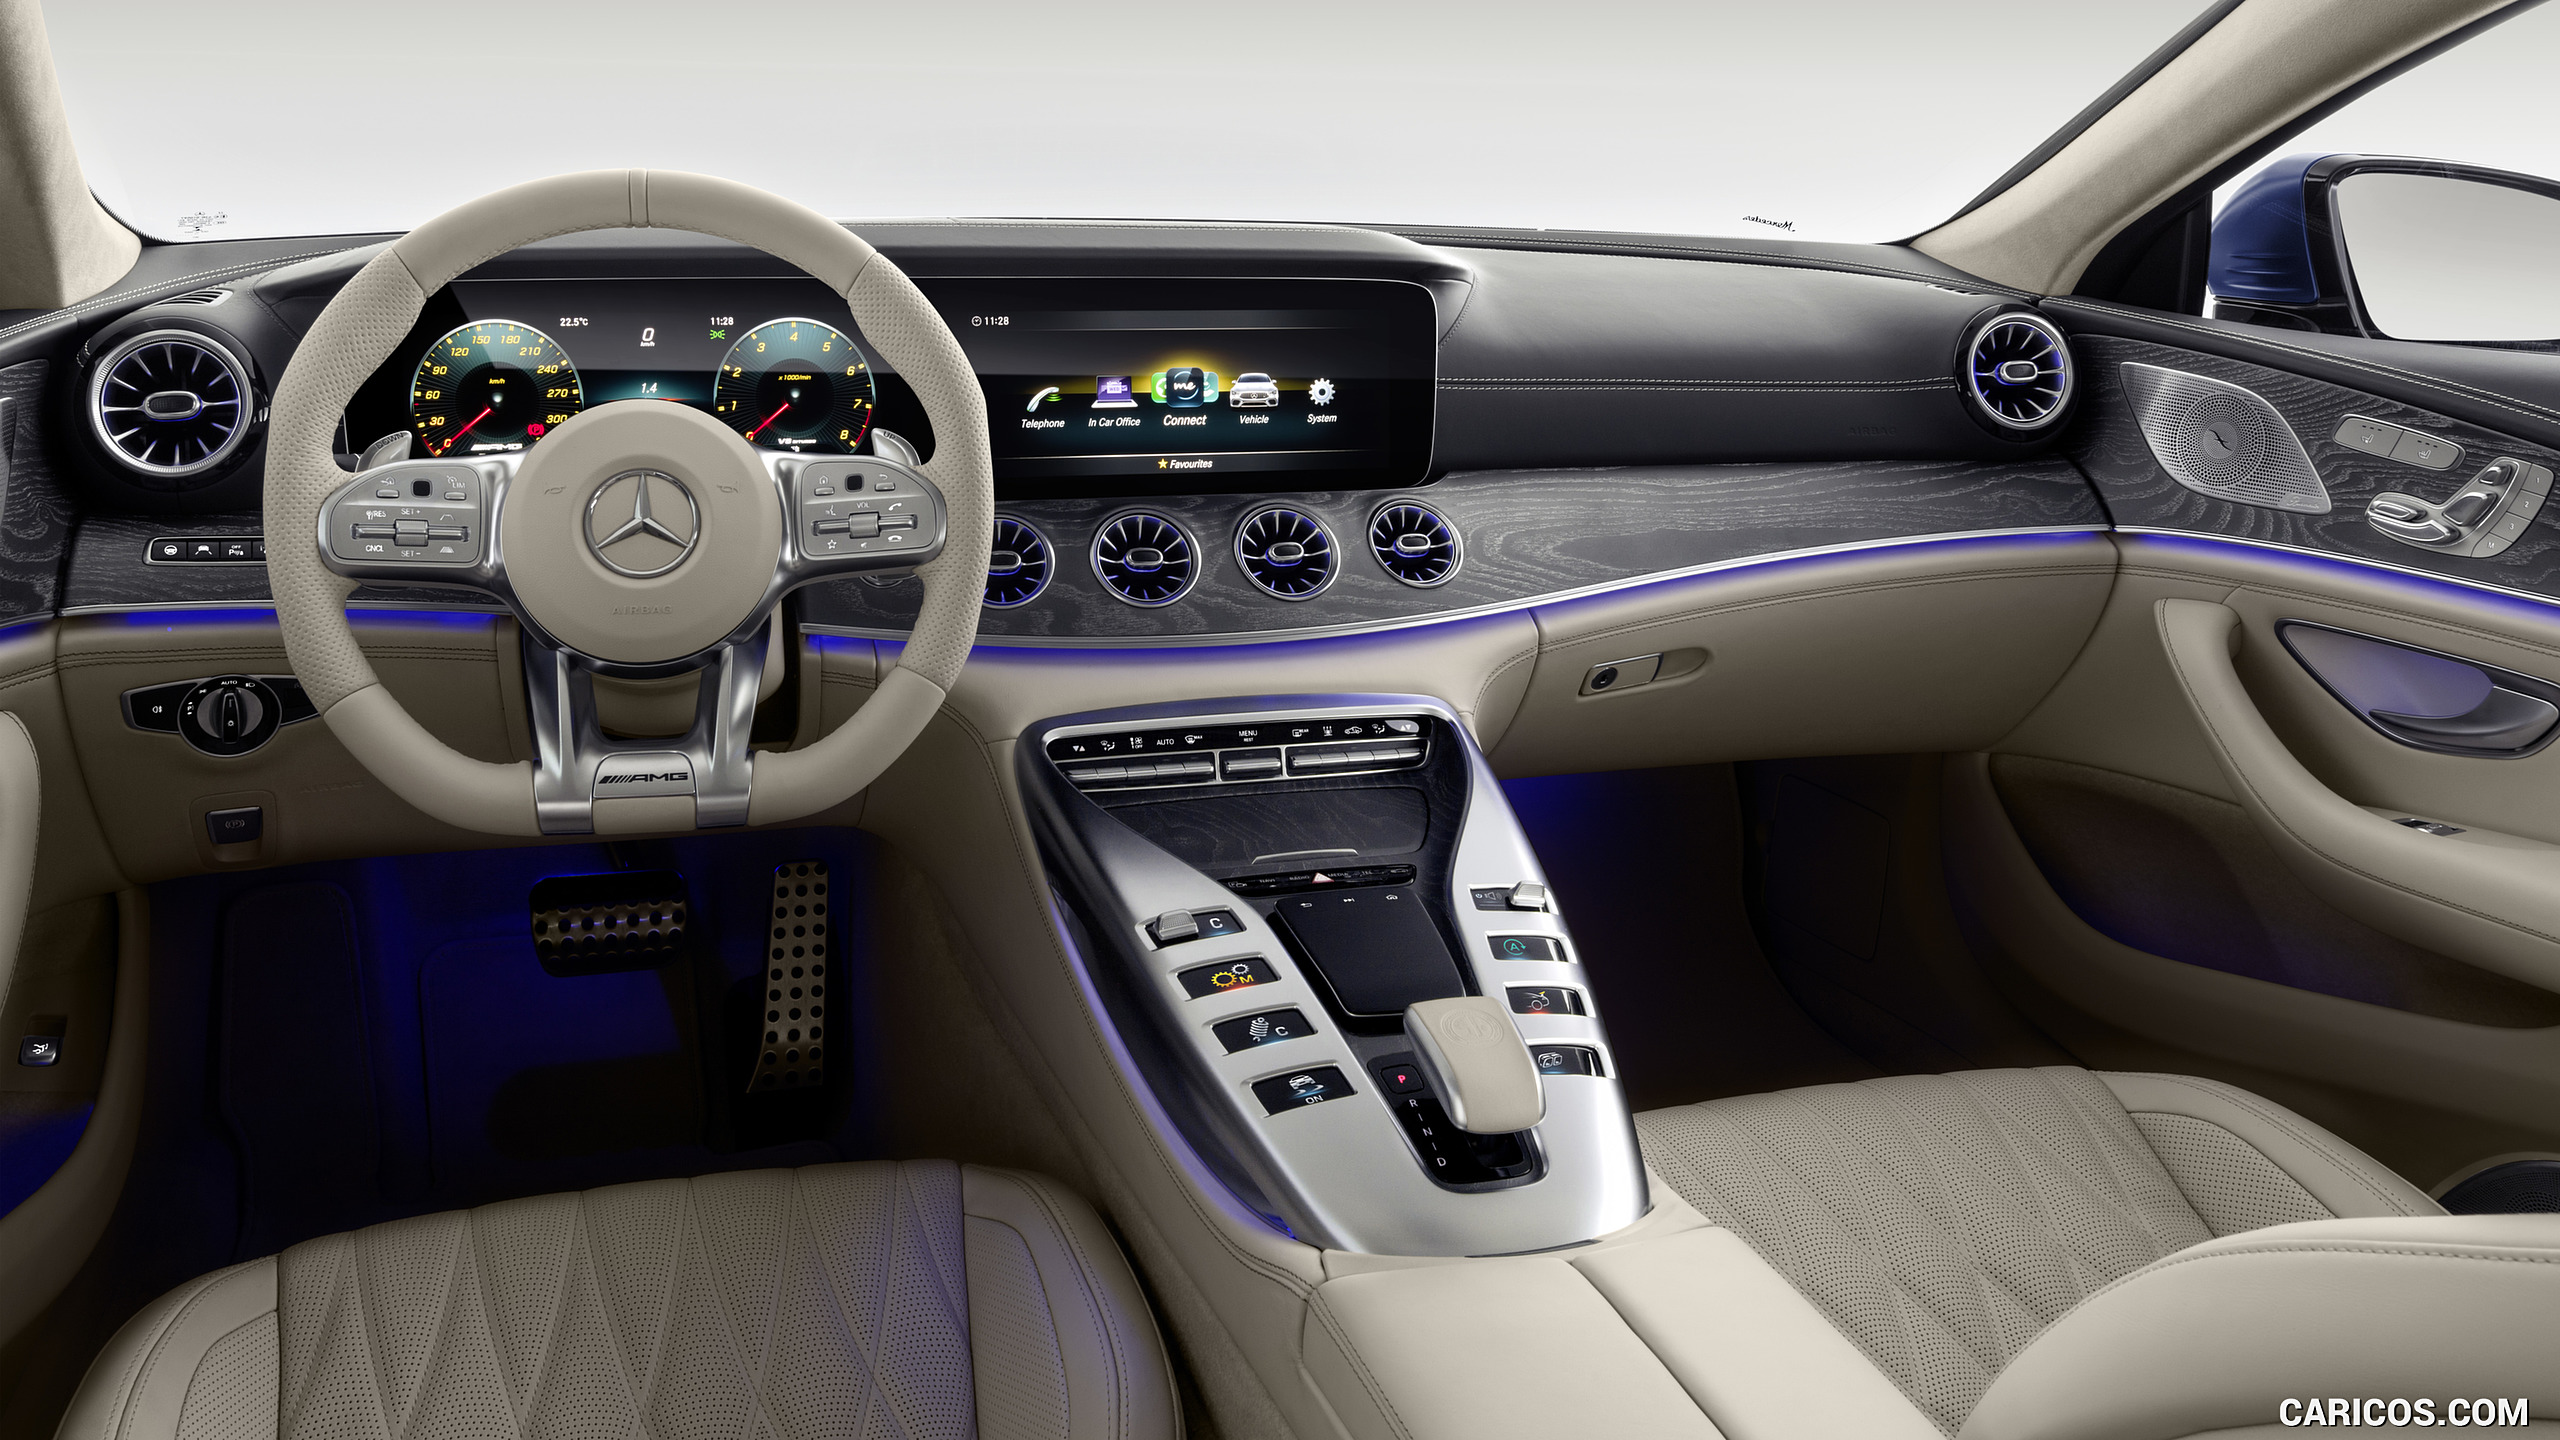 2019 Mercedes-AMG GT 63 S 4MATIC+ 4-Door Coupe - Interior, Cockpit, #85 of 427